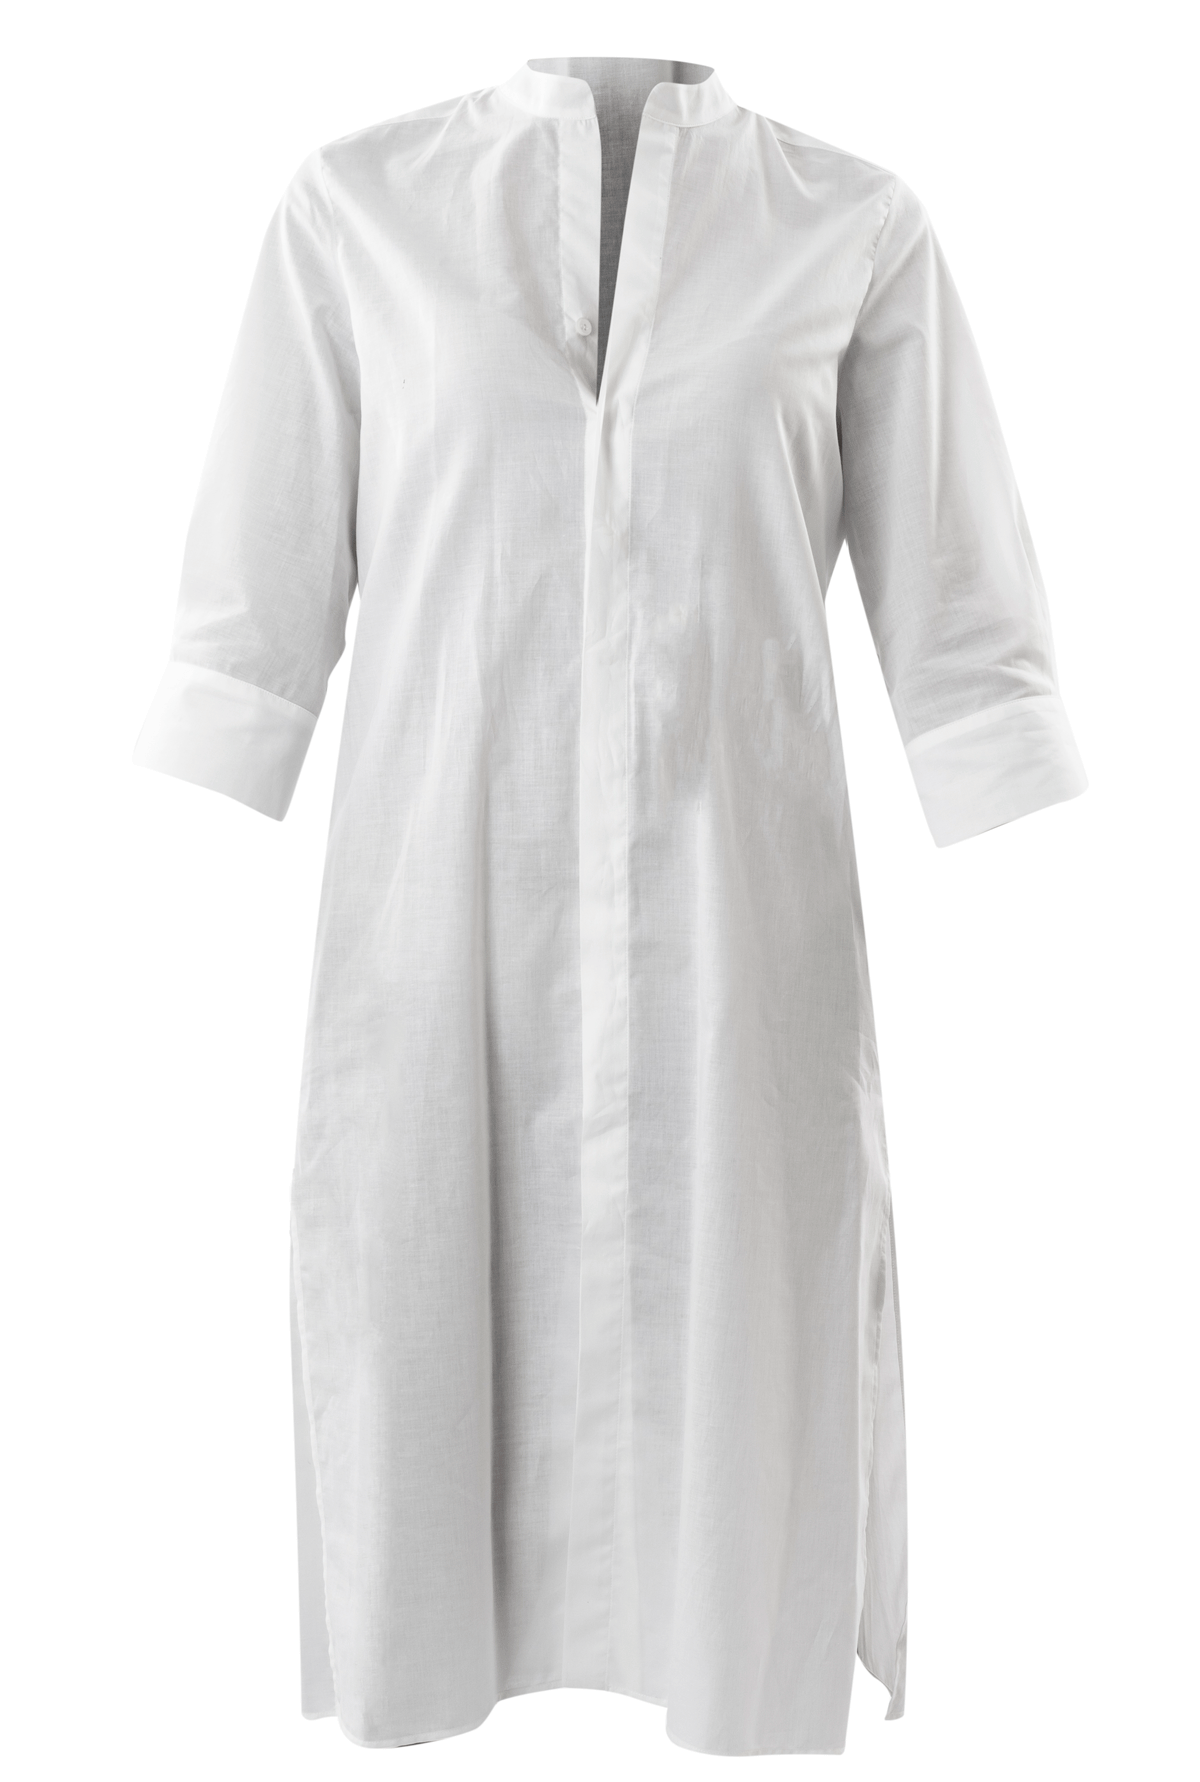 white linen shirt dress